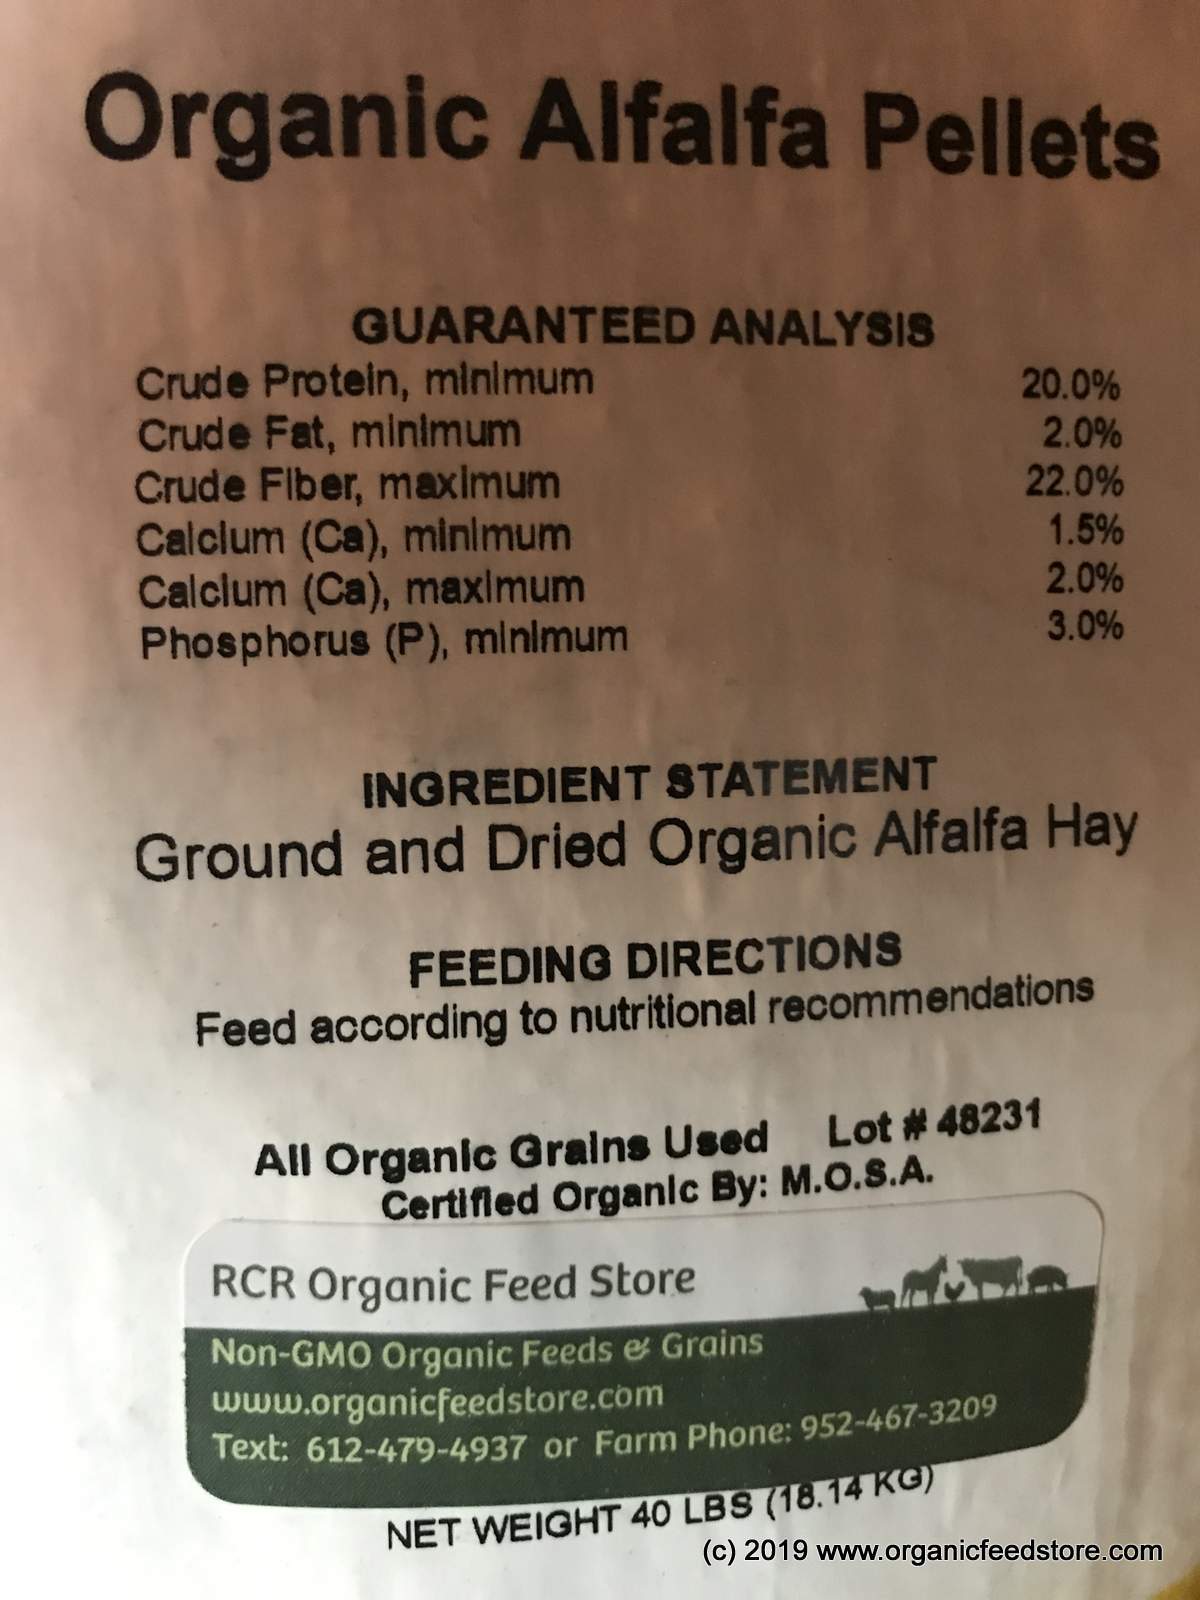 Alfalfa Pellets Organic livestock feed certified